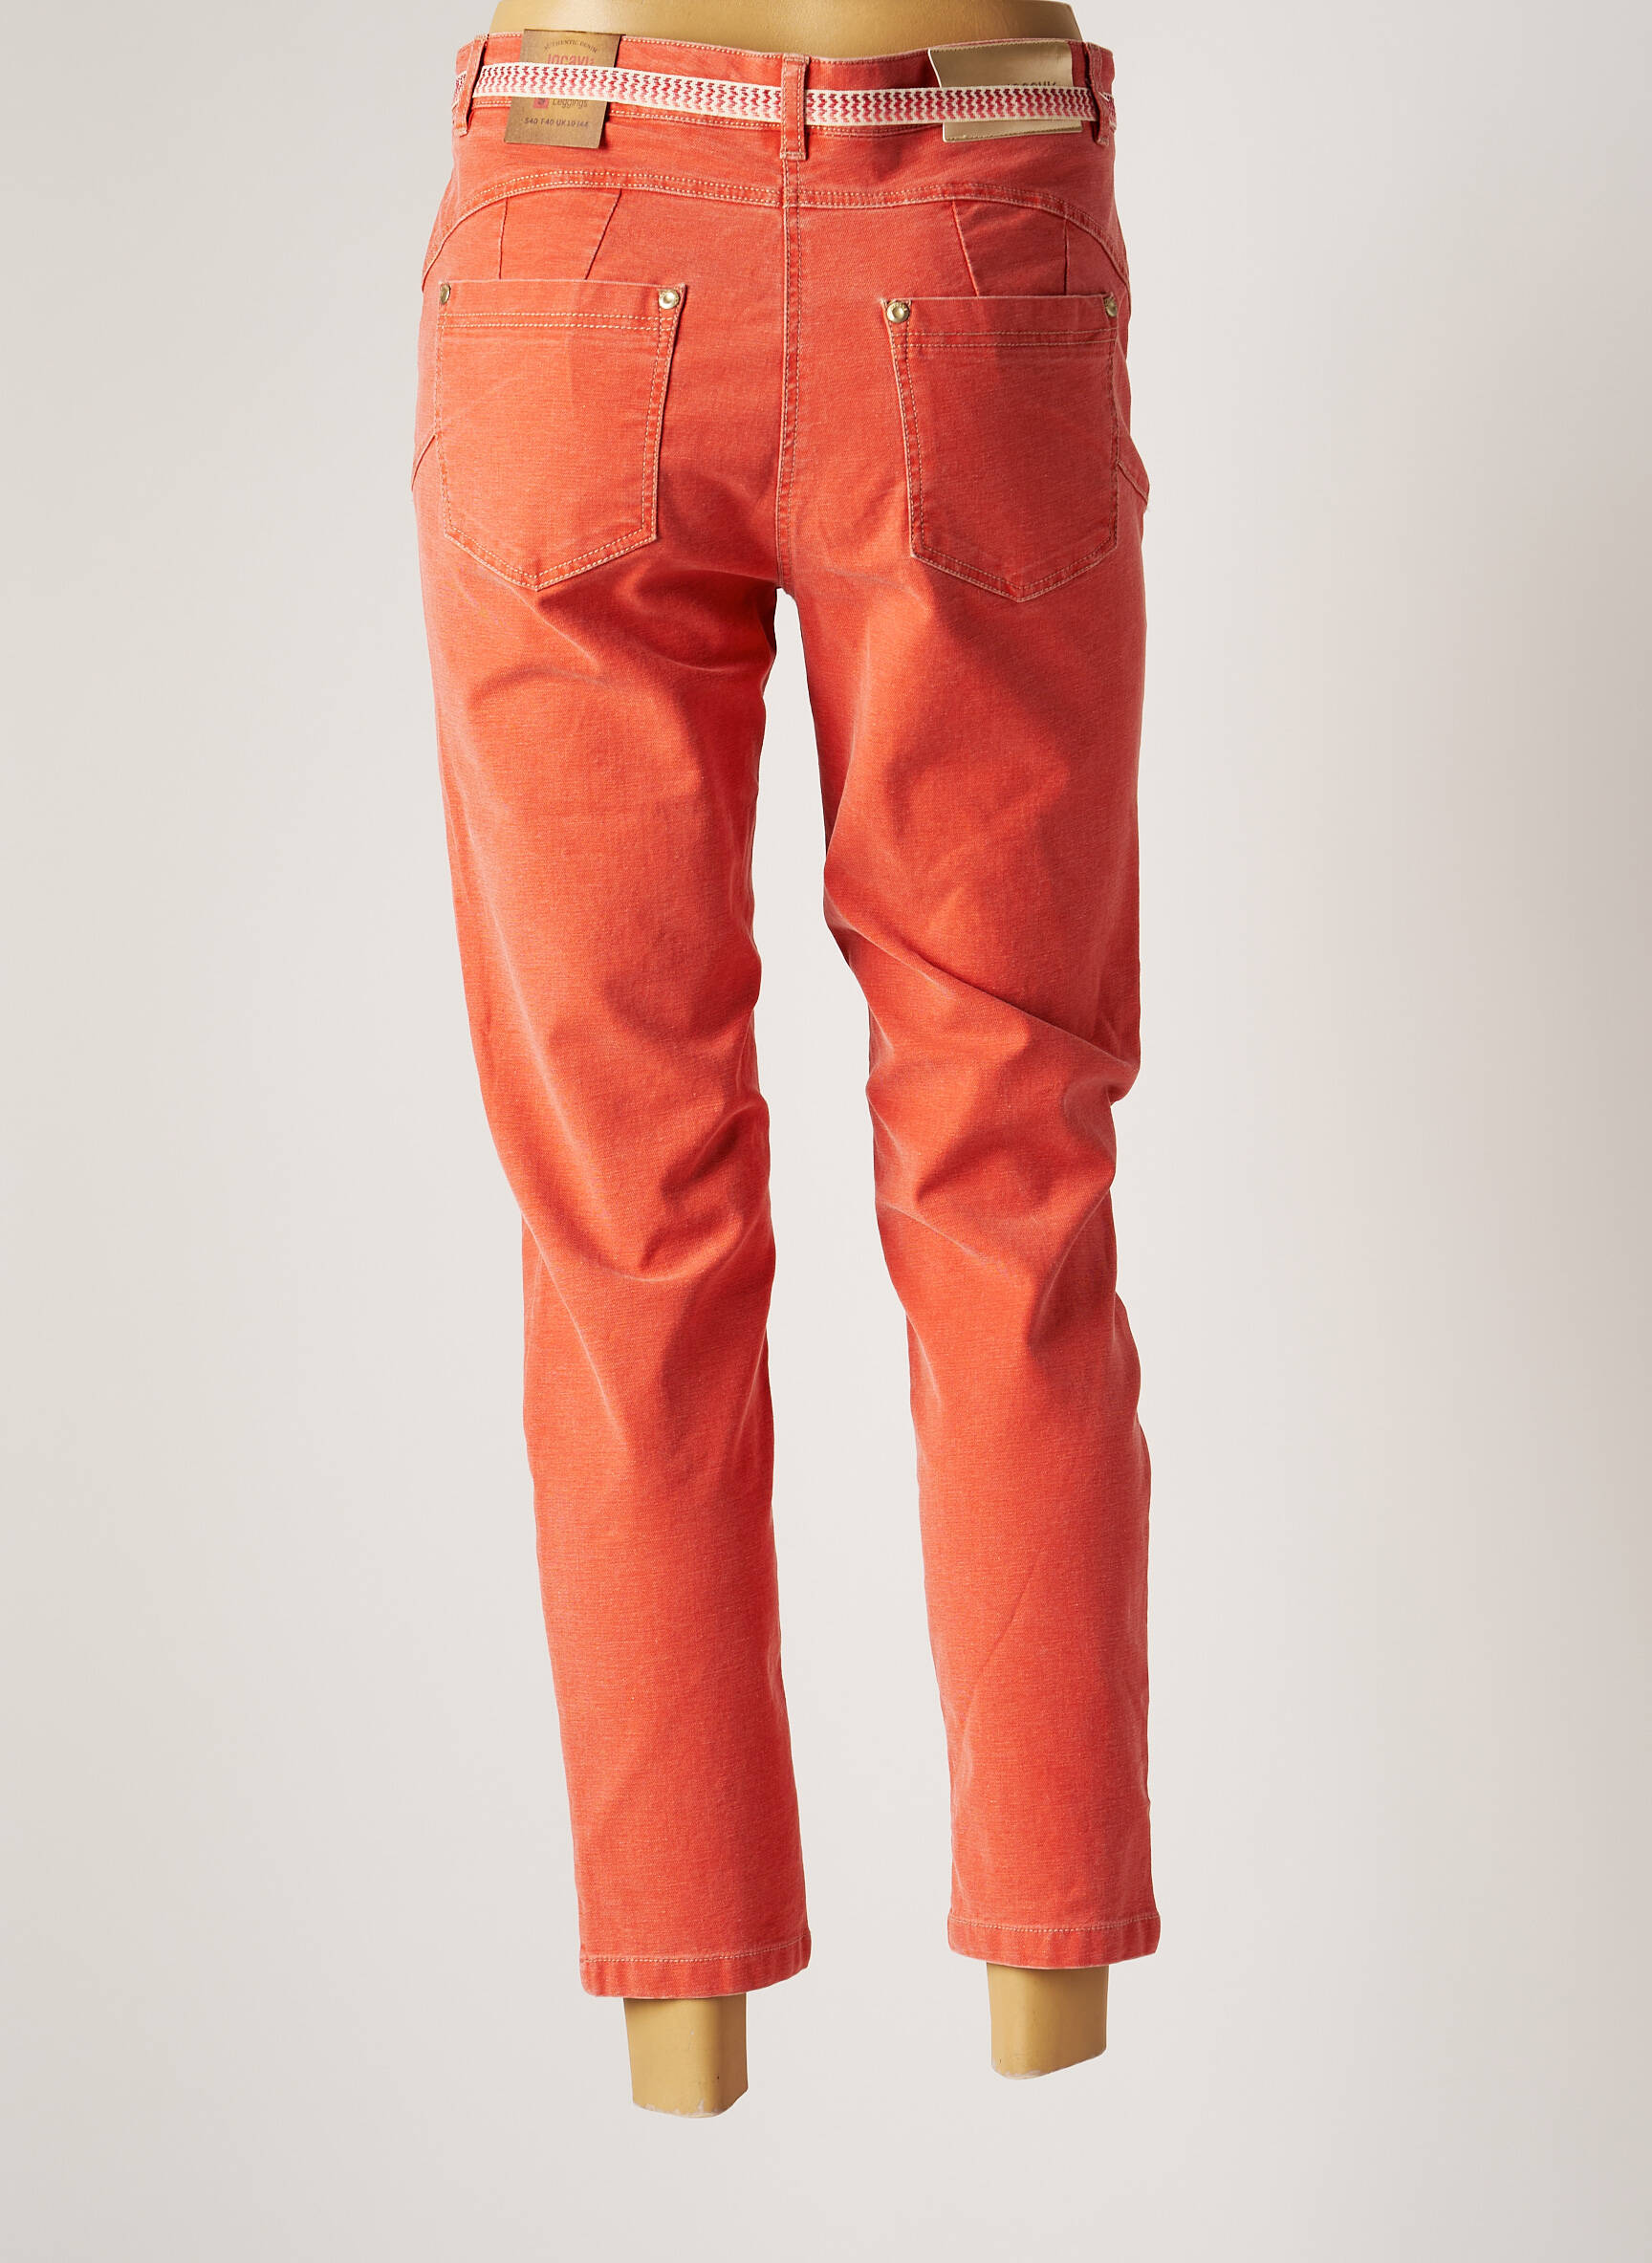 Jocavi Pantalon7 8 Femme De Couleur Orange Destockage 1869331-orange - Modz